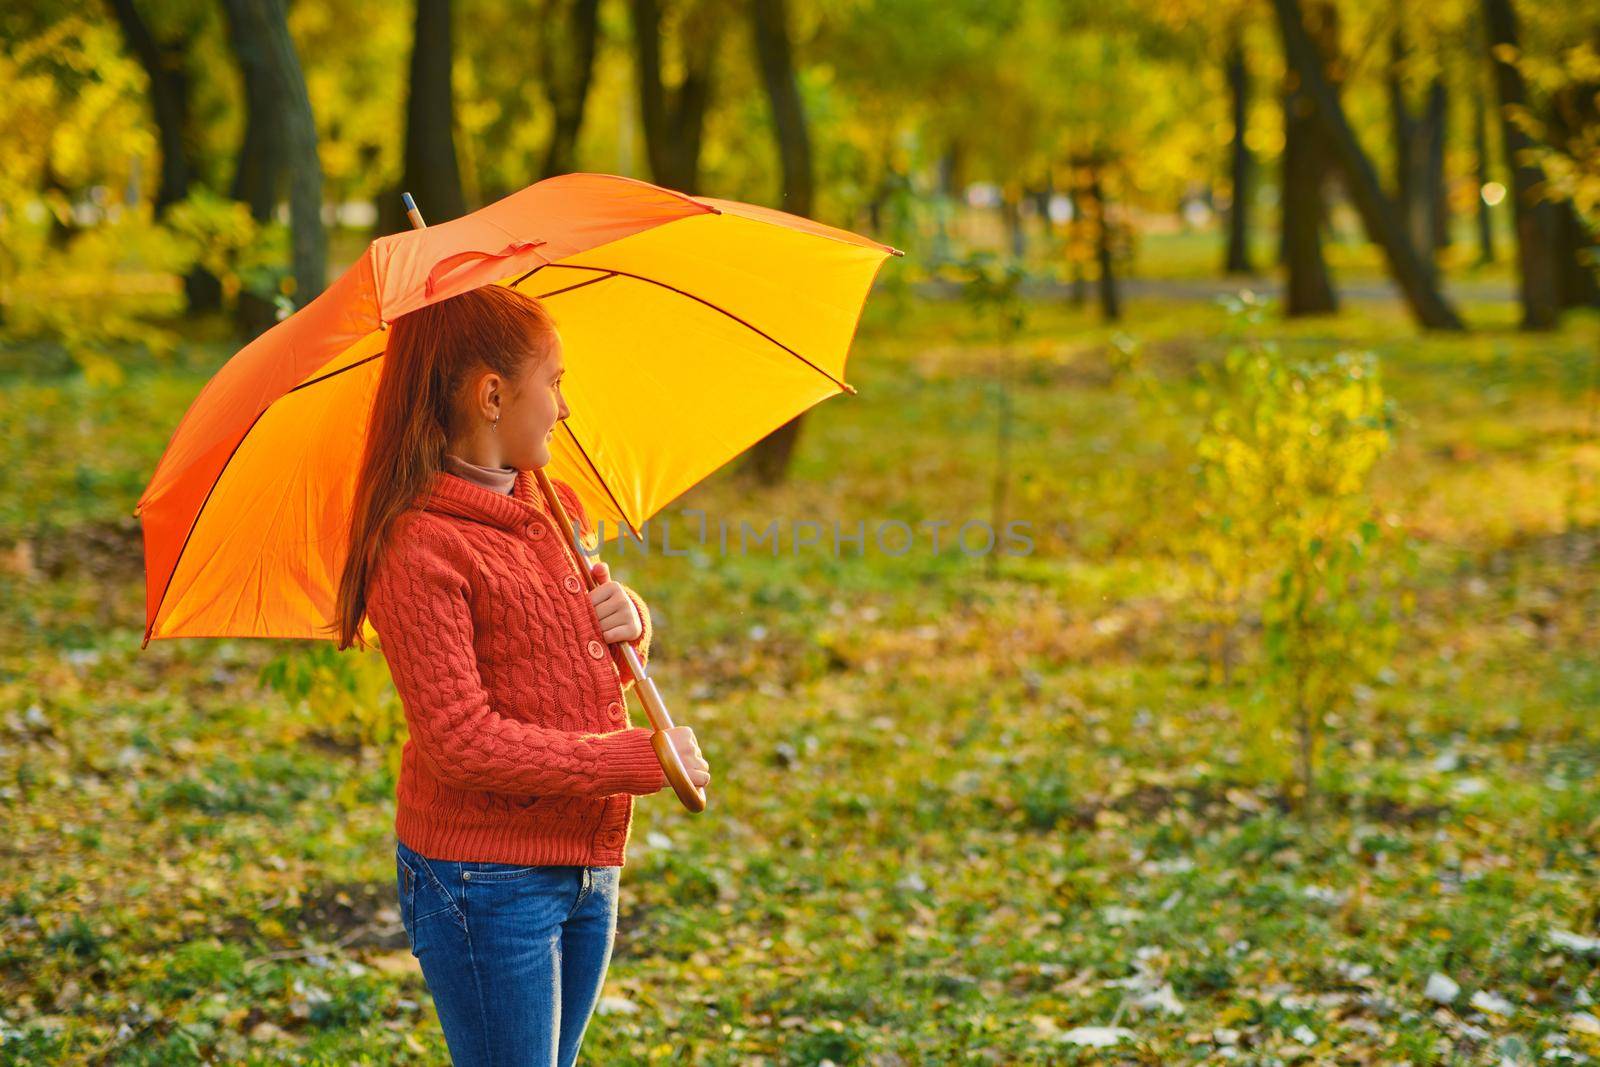 Funny kid under an orange umbrella outdoors in Autumn park